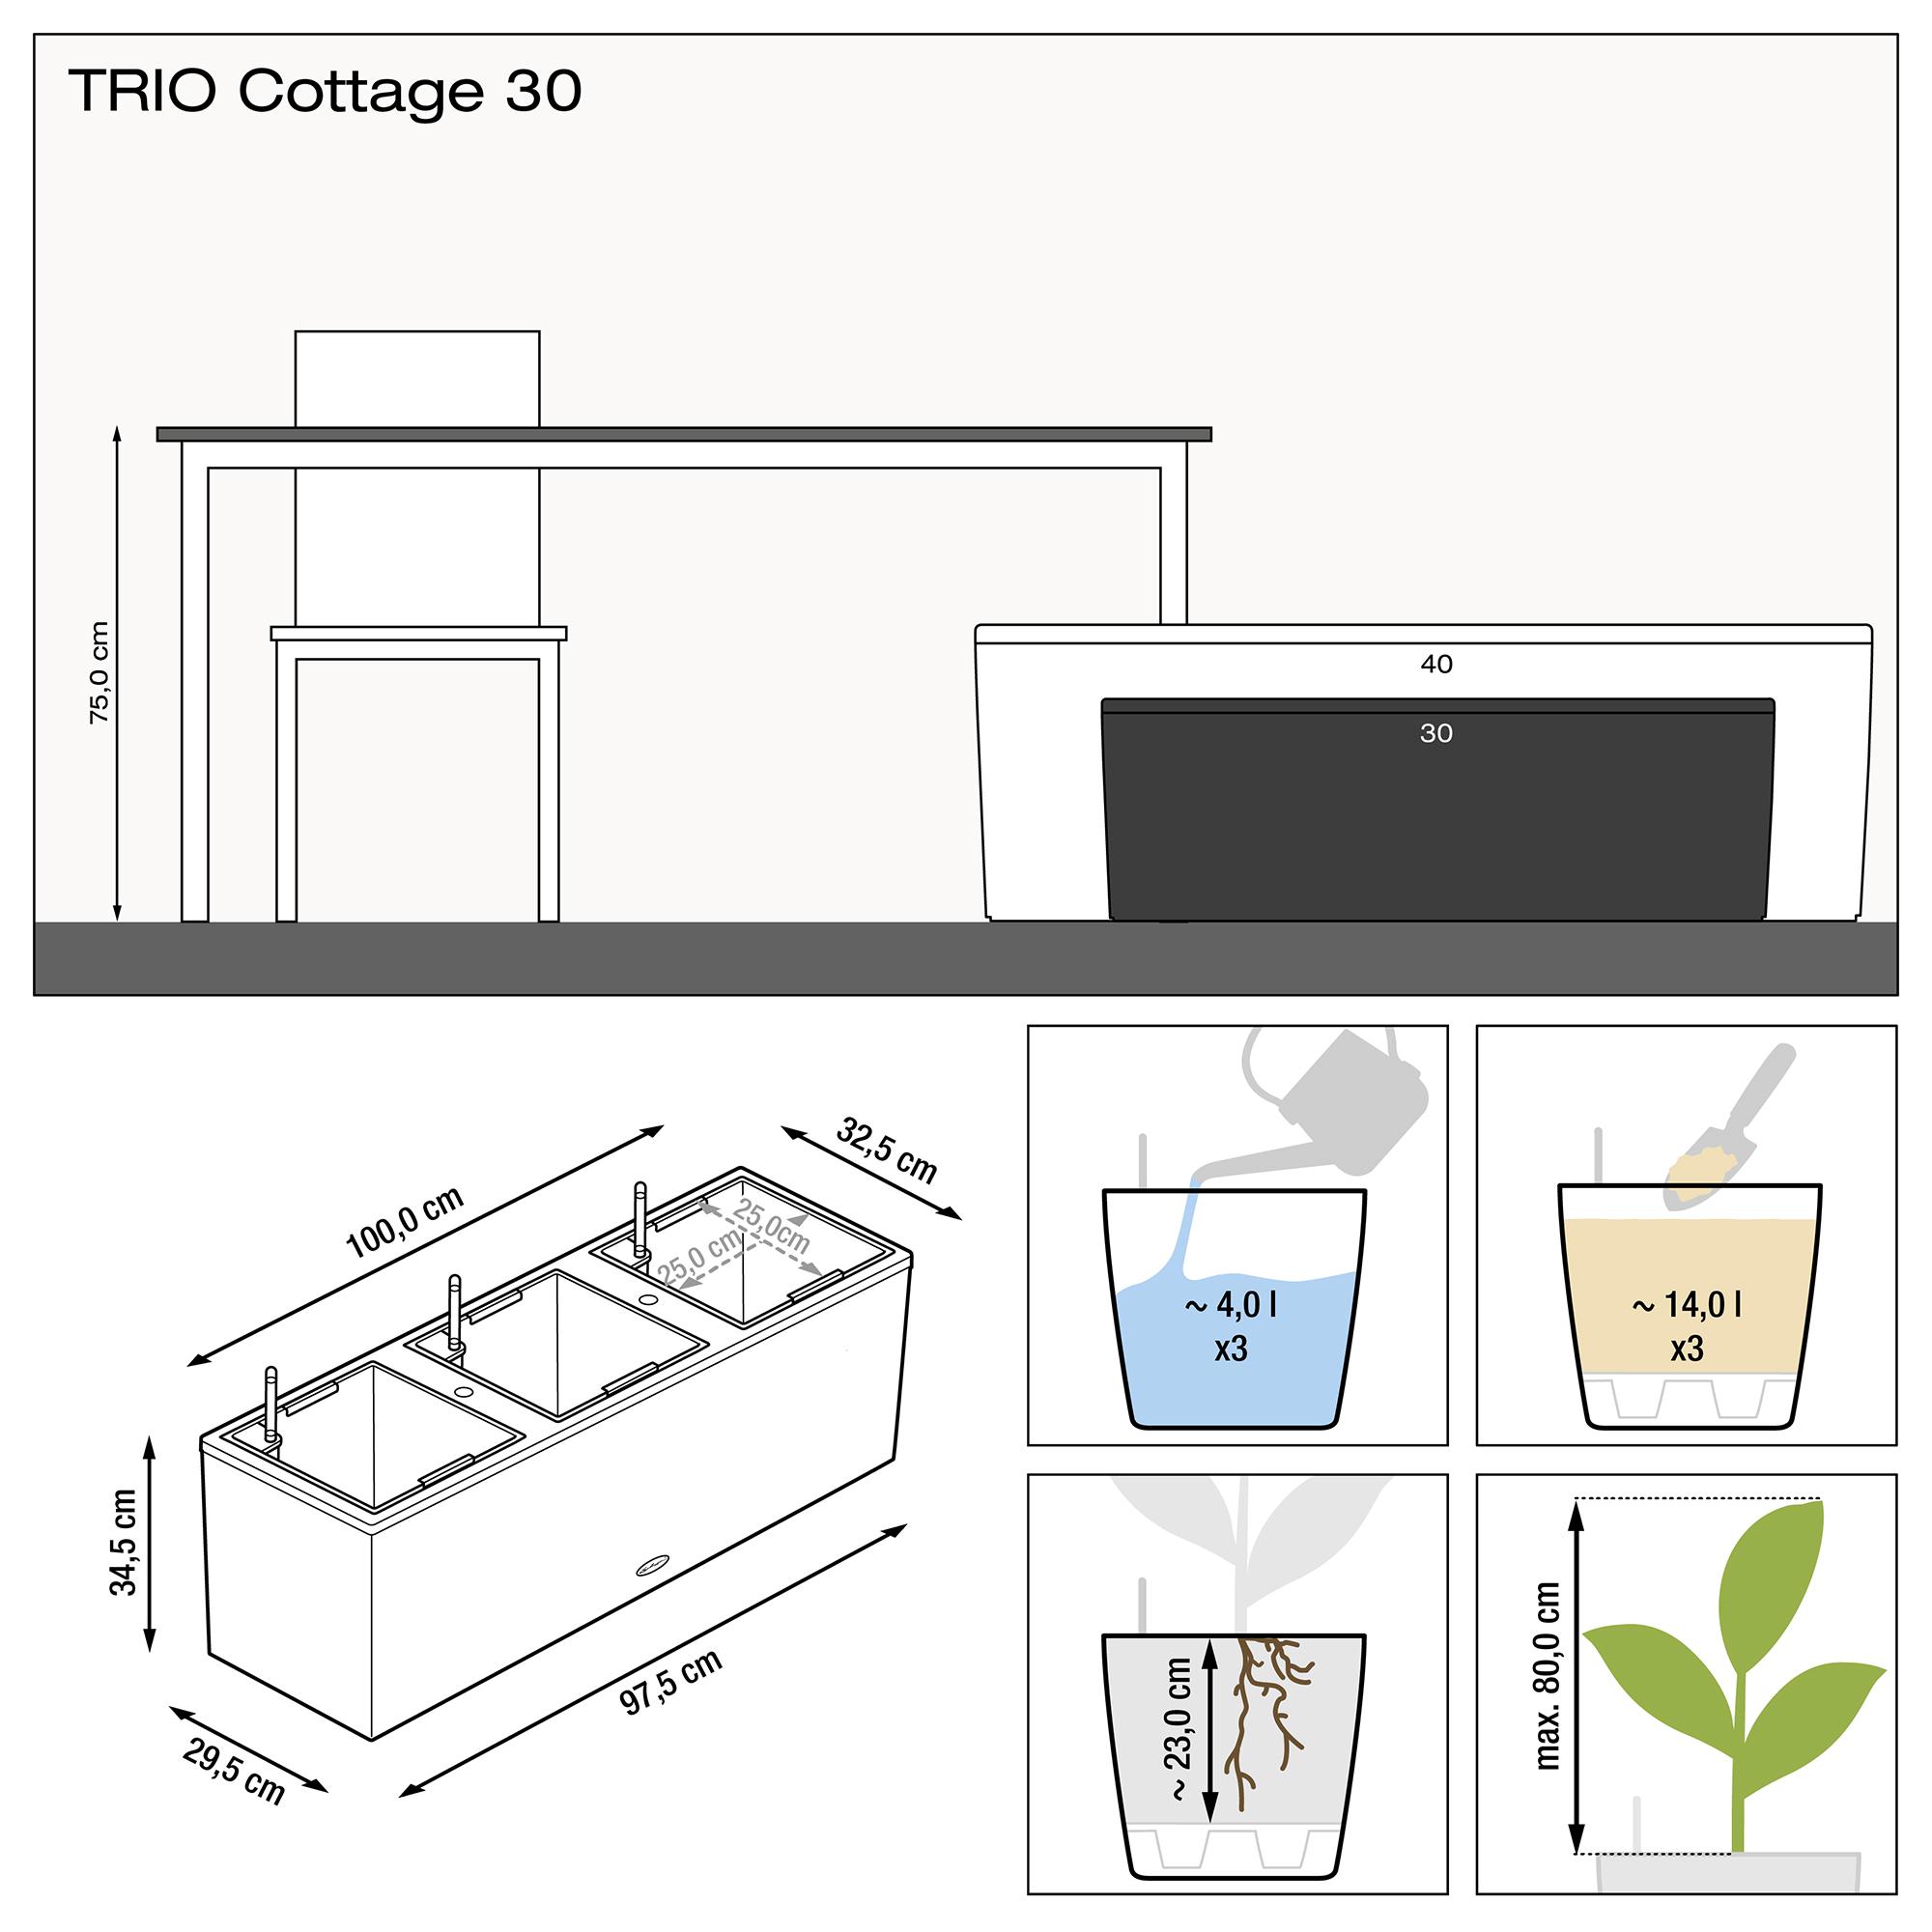 le_trio-cottage30_product_addi_nz